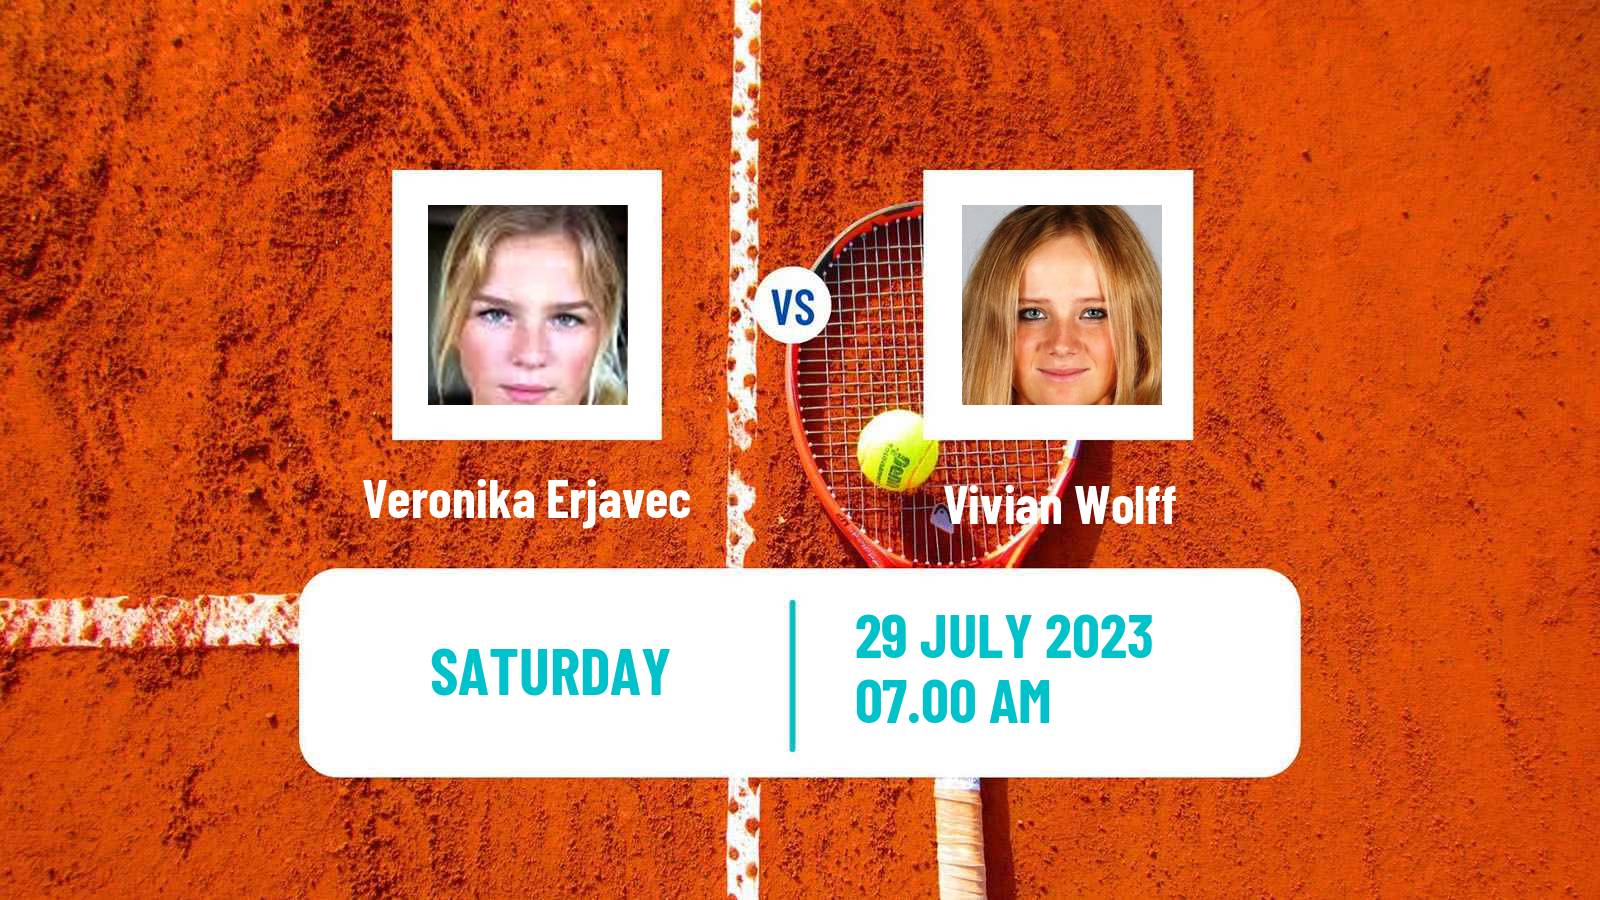 Tennis ITF W25 Horb Women Veronika Erjavec - Vivian Wolff